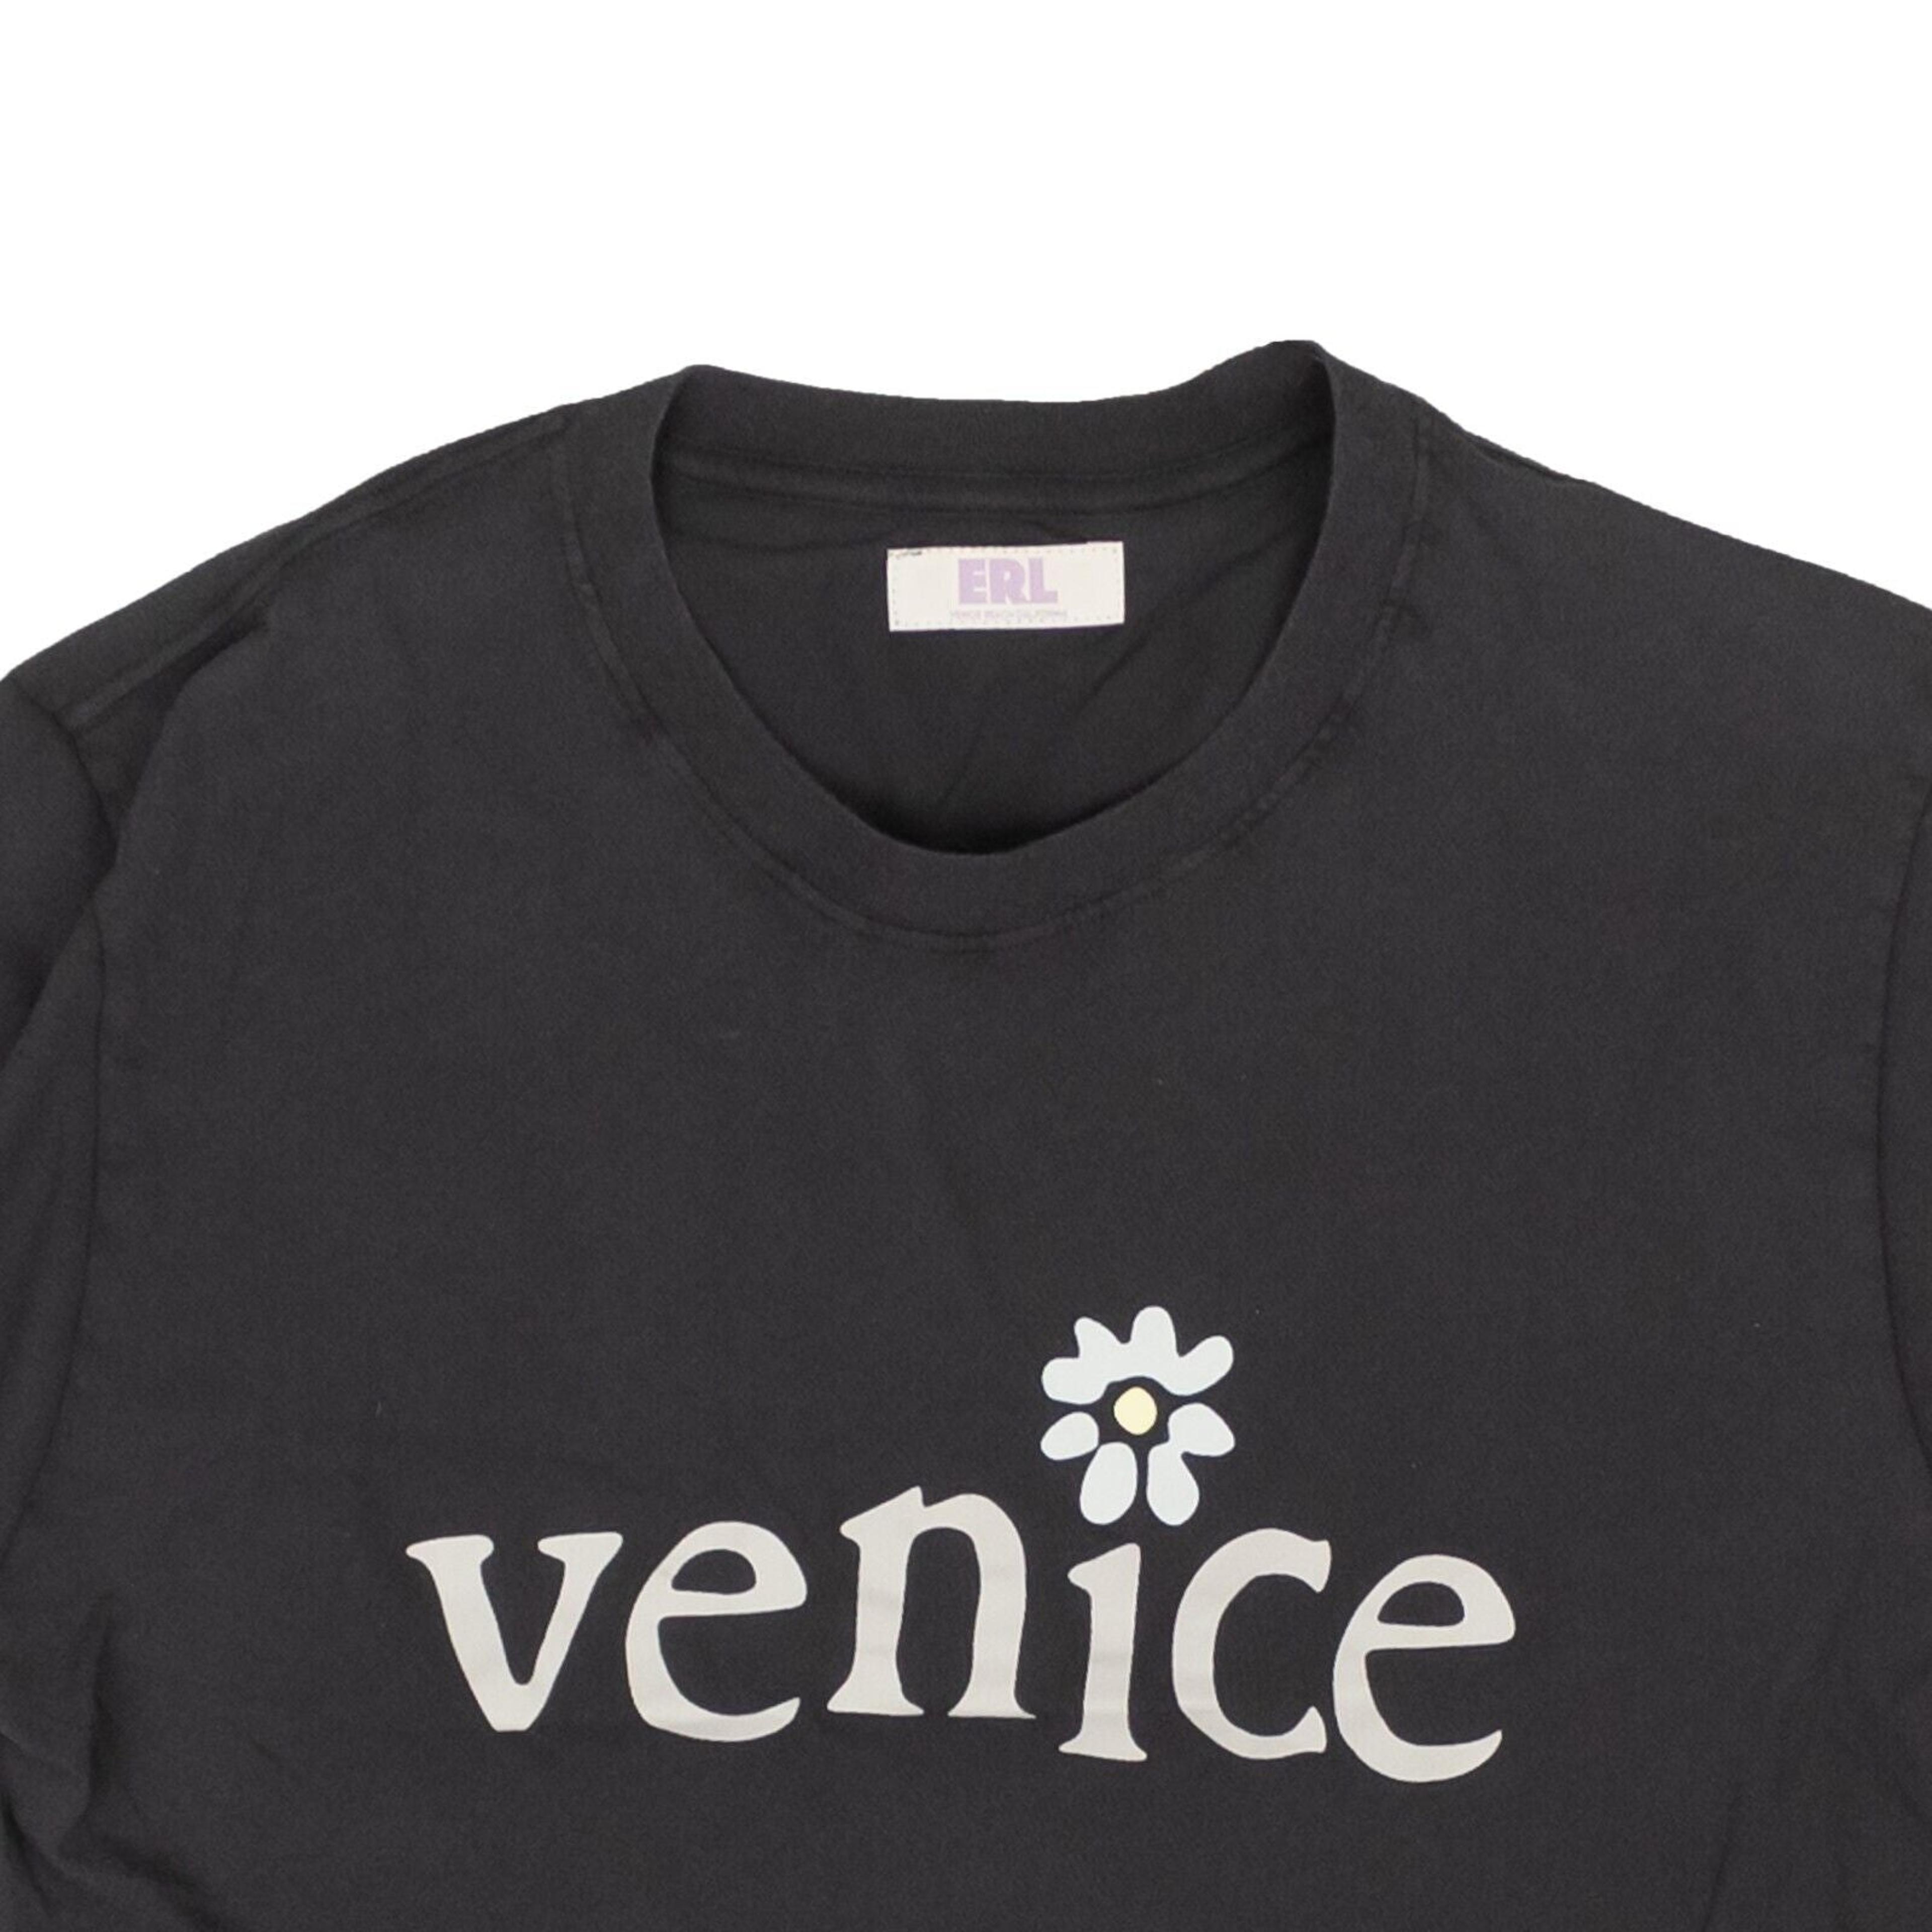 Alternate View 1 of Erl Venice Print T-Shirt - Black